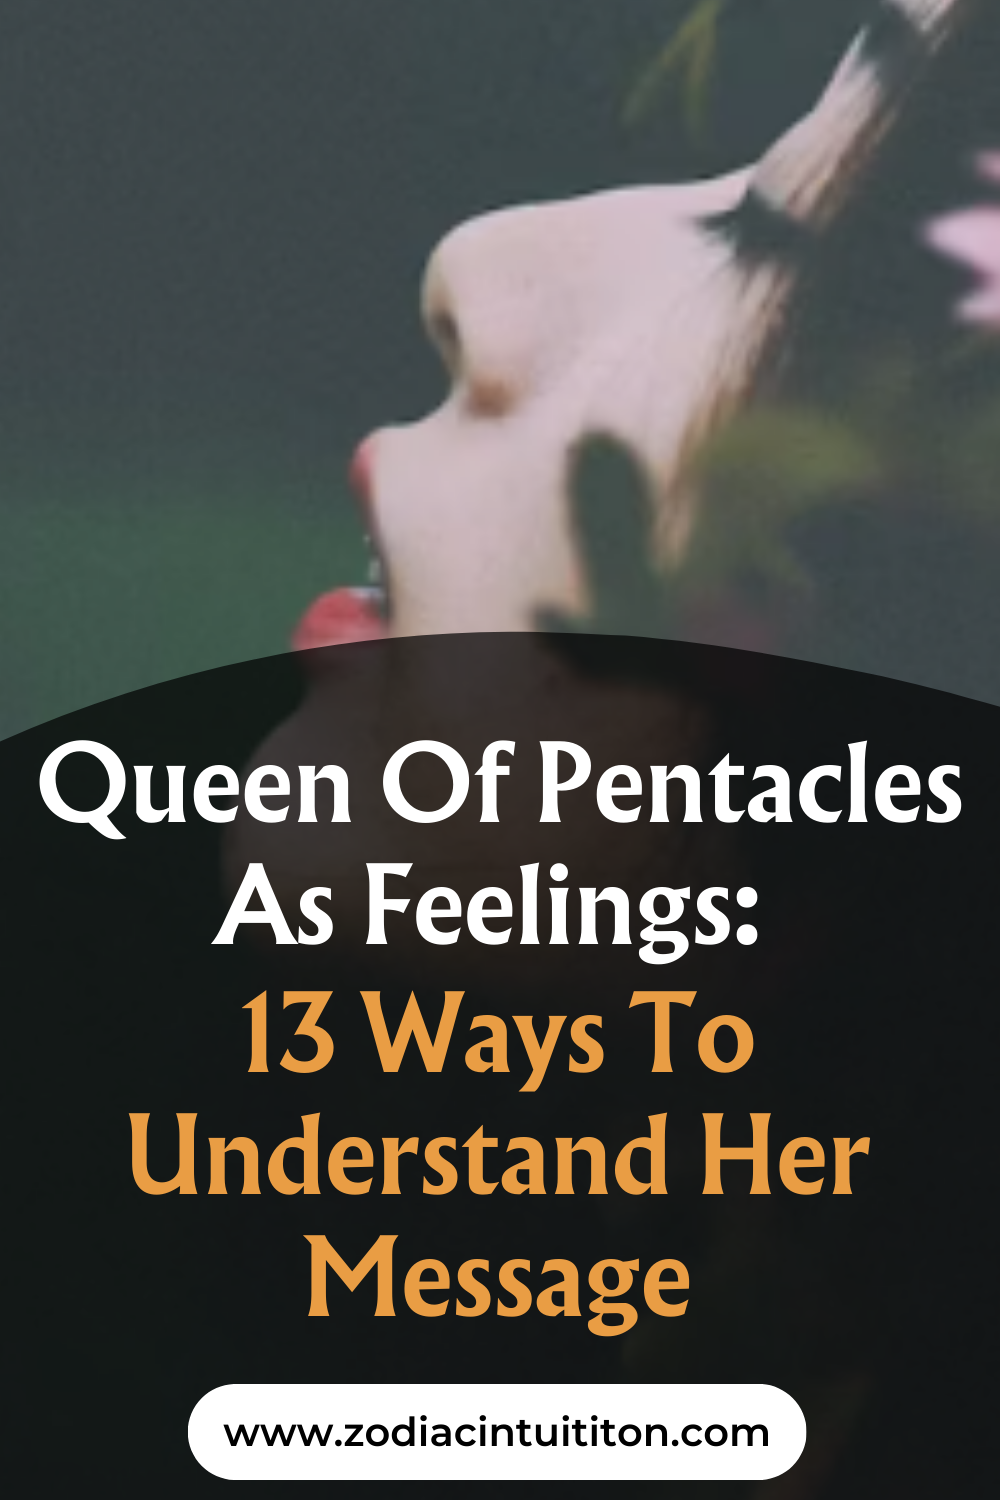 Queen Of Pentacles As Feelings: 13 Ways To Understand Her Message